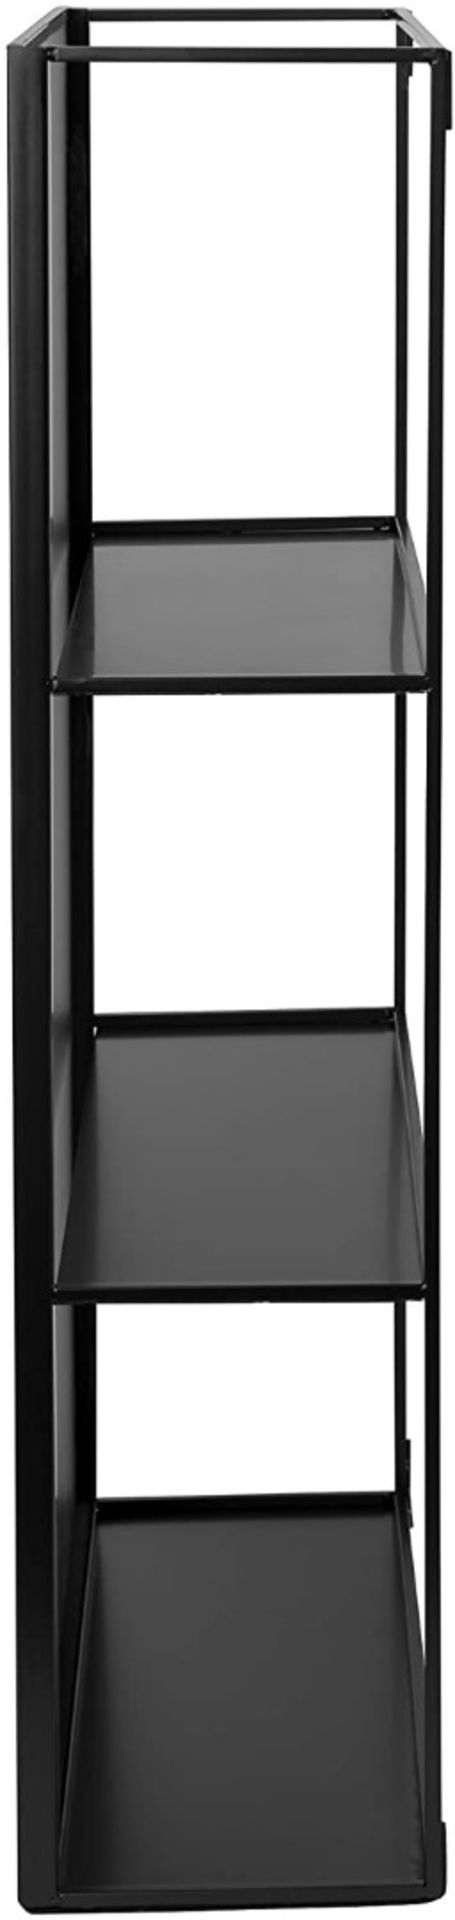 1 x Umbra 'CUBIKO' Sleek Modern Mirrored Medicine Cabinet With A Black Metal Frame - Dimensions: - Image 8 of 8